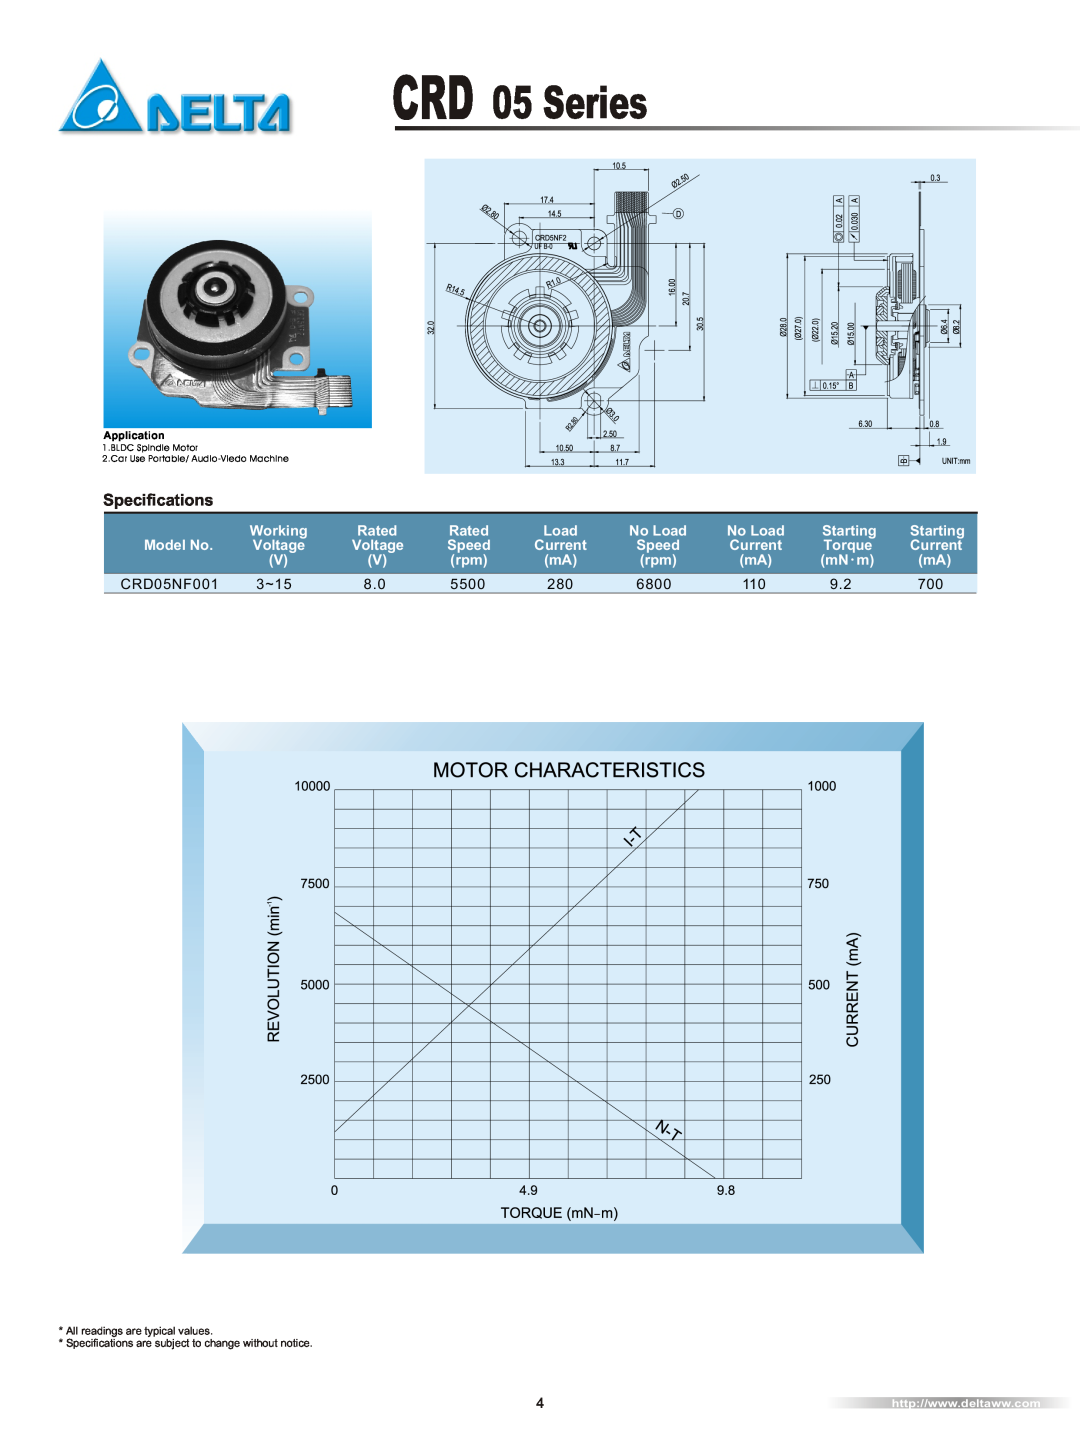 Delta Electronics CRD05 Series specifications CRD 05 Series, Specifications, Model No, Rated, Starting, Speed, Torque 